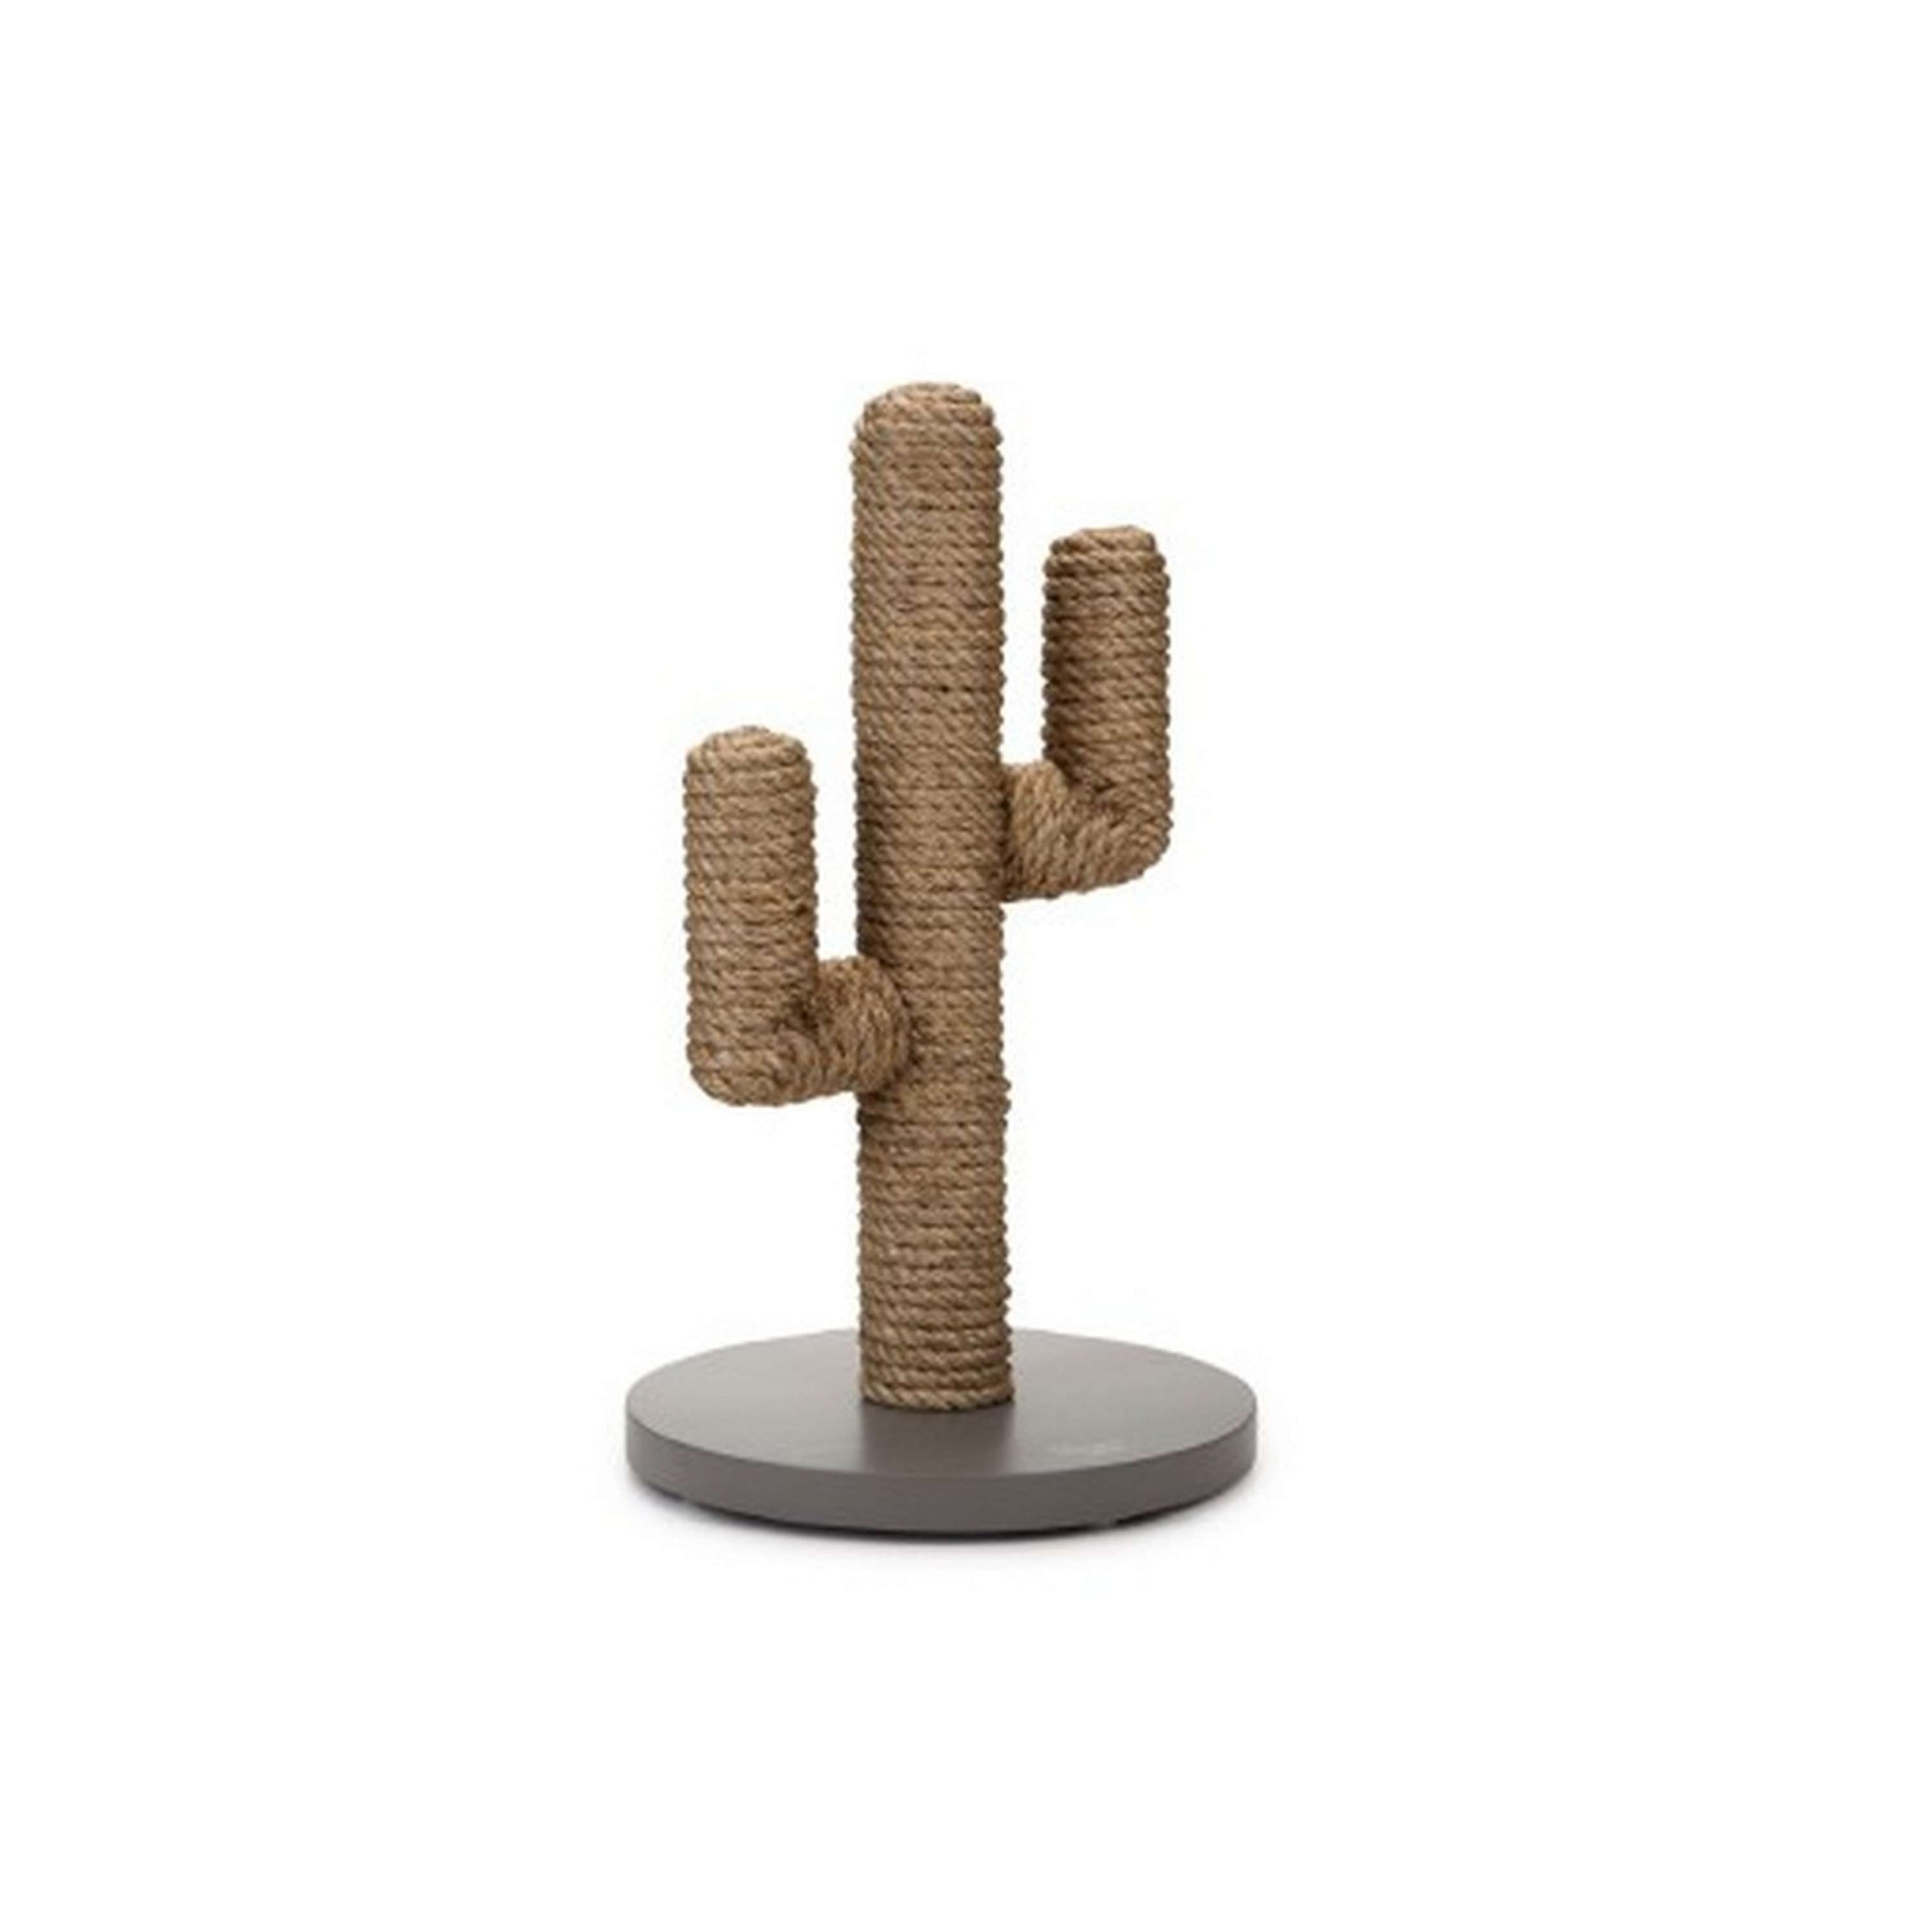 Designed by Lotte Poteau à Gratter Cactus Taupe